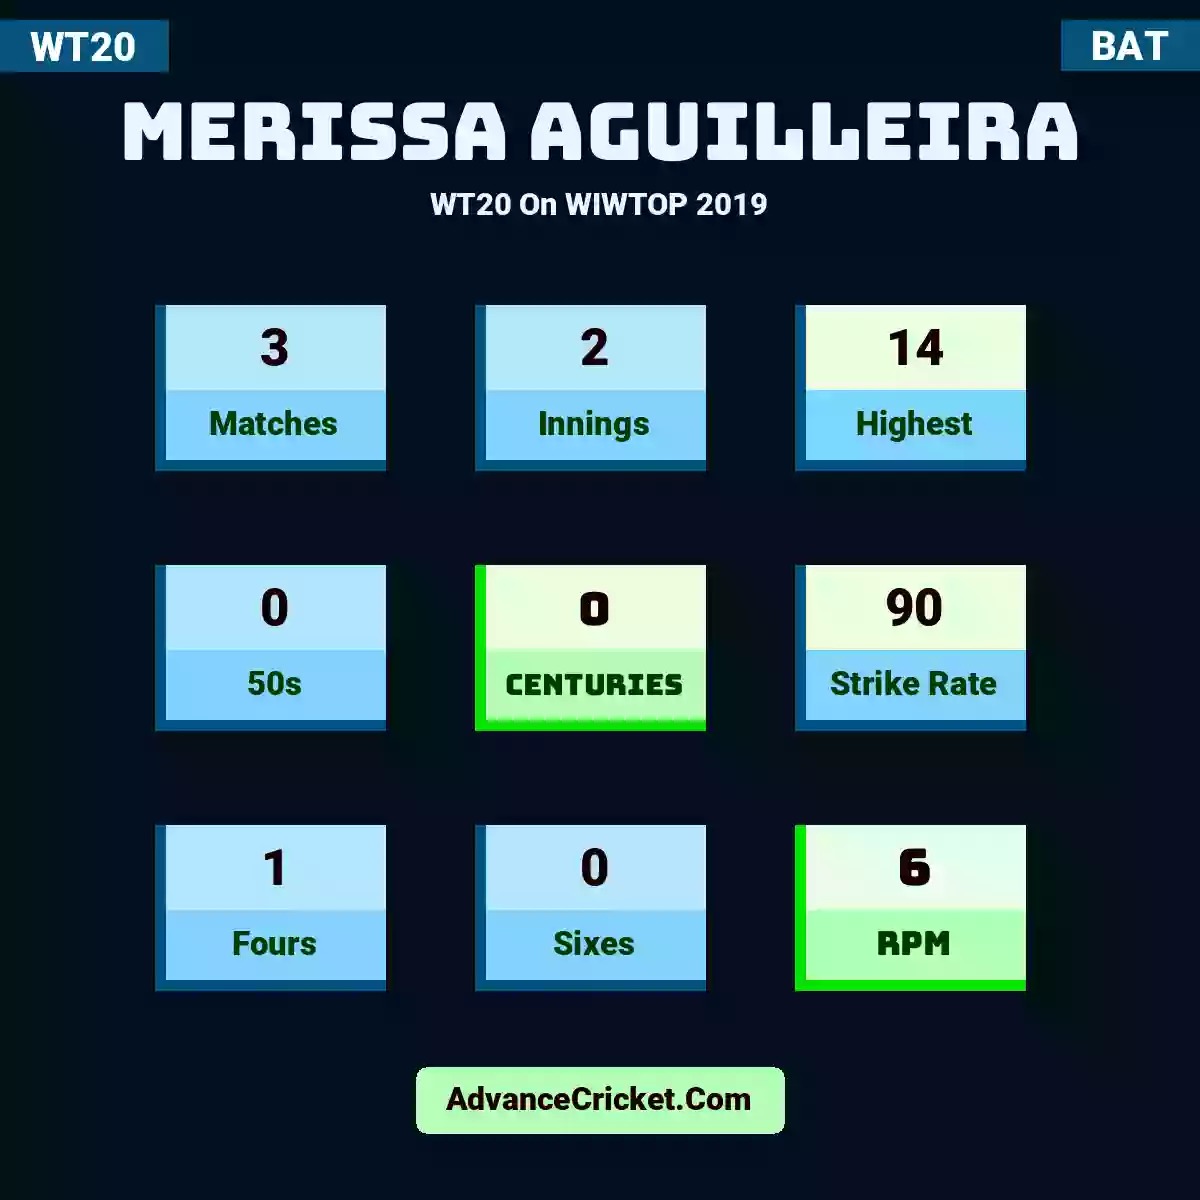 Merissa Aguilleira WT20  On WIWTOP 2019, Merissa Aguilleira played 3 matches, scored 14 runs as highest, 0 half-centuries, and 0 centuries, with a strike rate of 90. M.Aguilleira hit 1 fours and 0 sixes, with an RPM of 6.